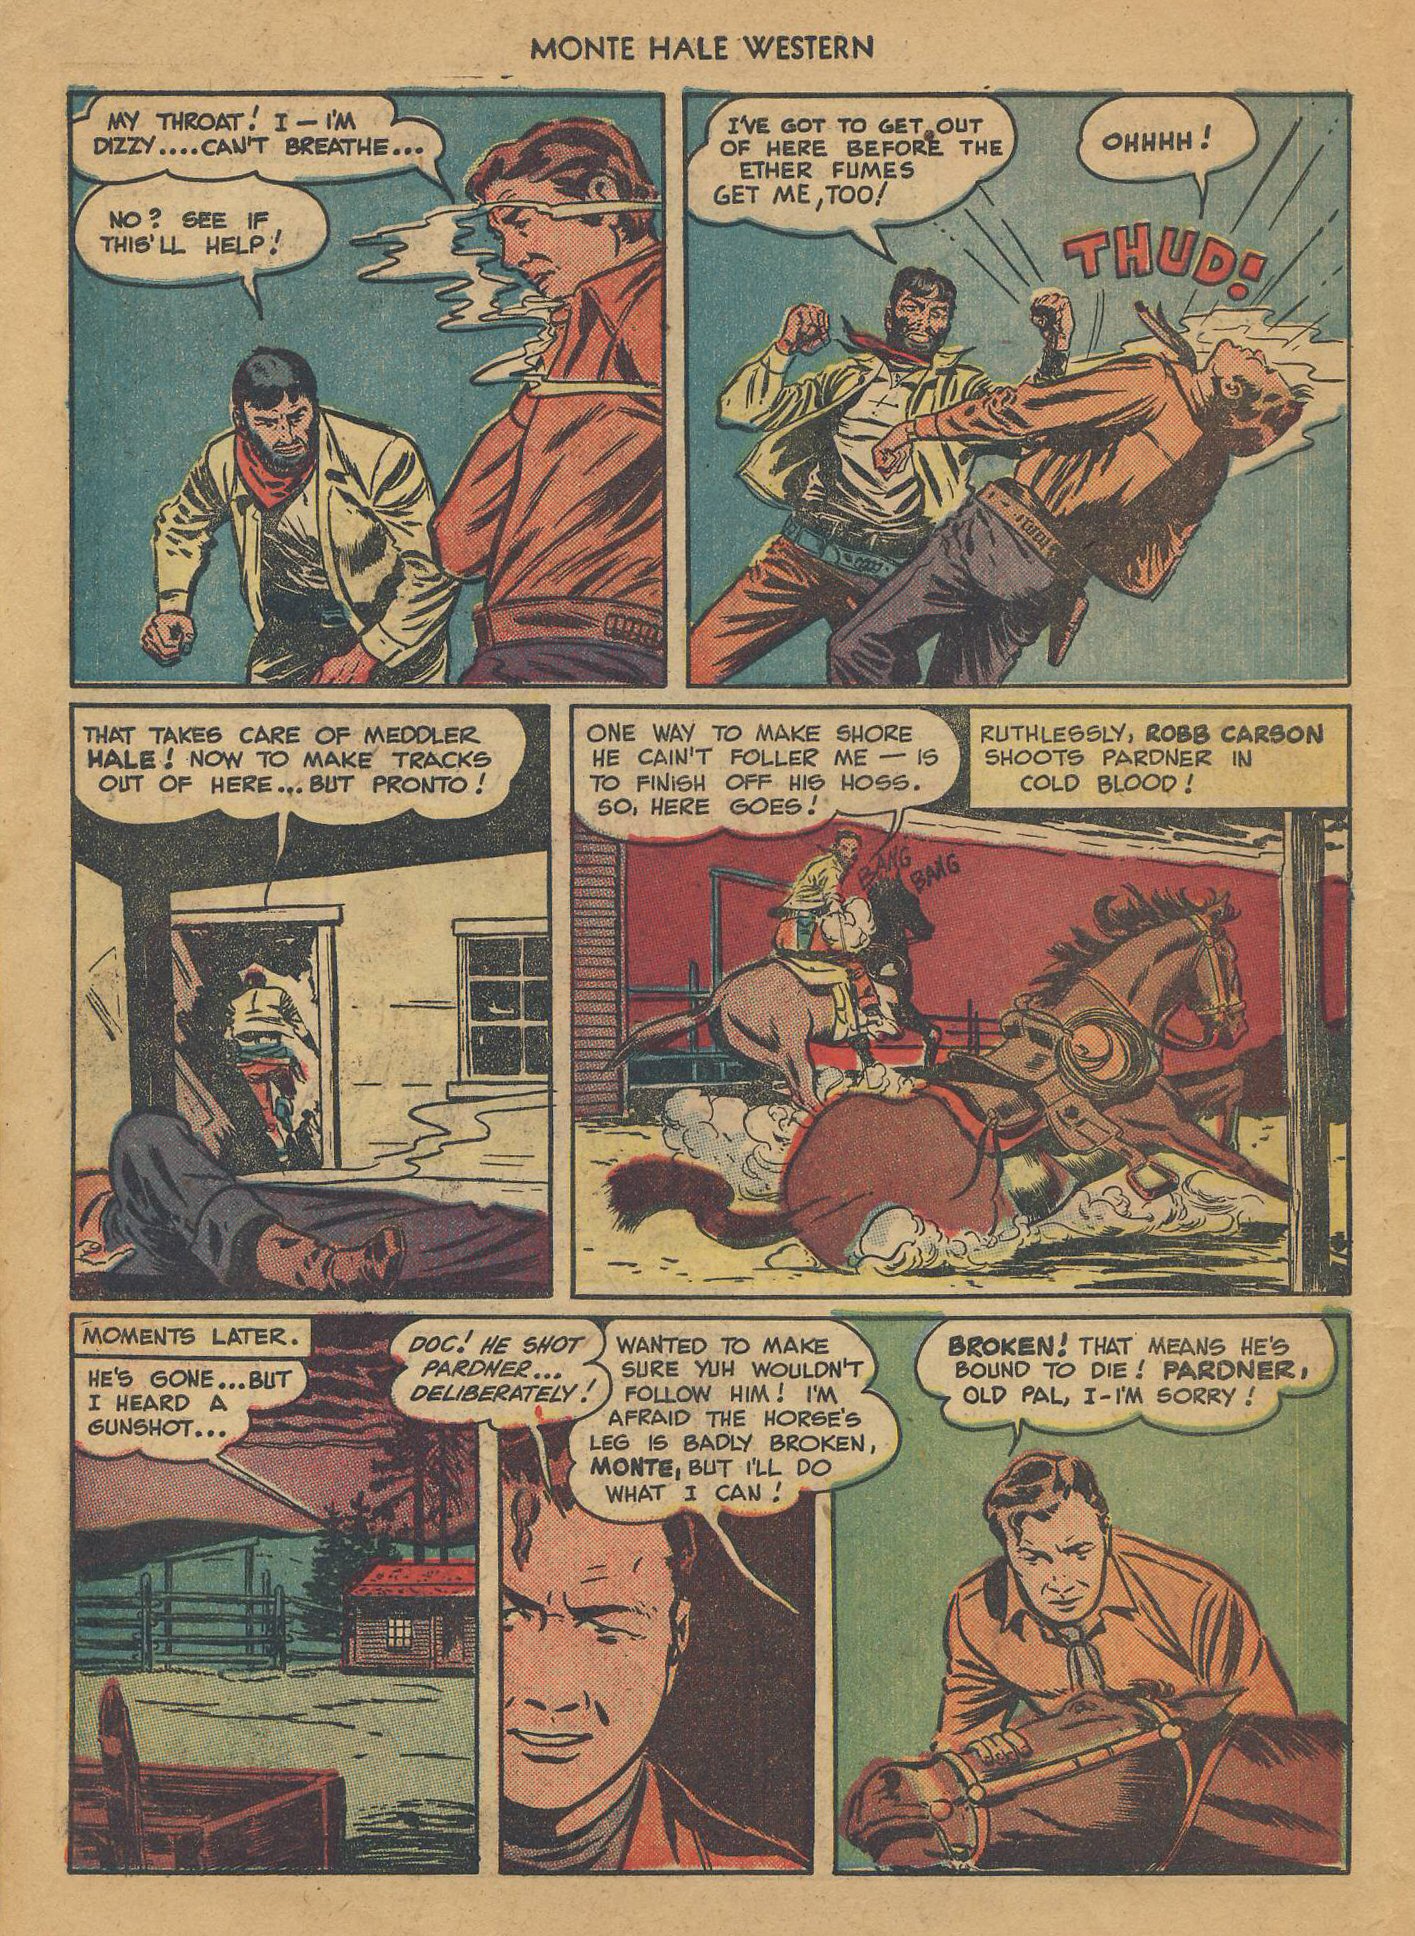 Read online Monte Hale Western comic -  Issue #36 - 17